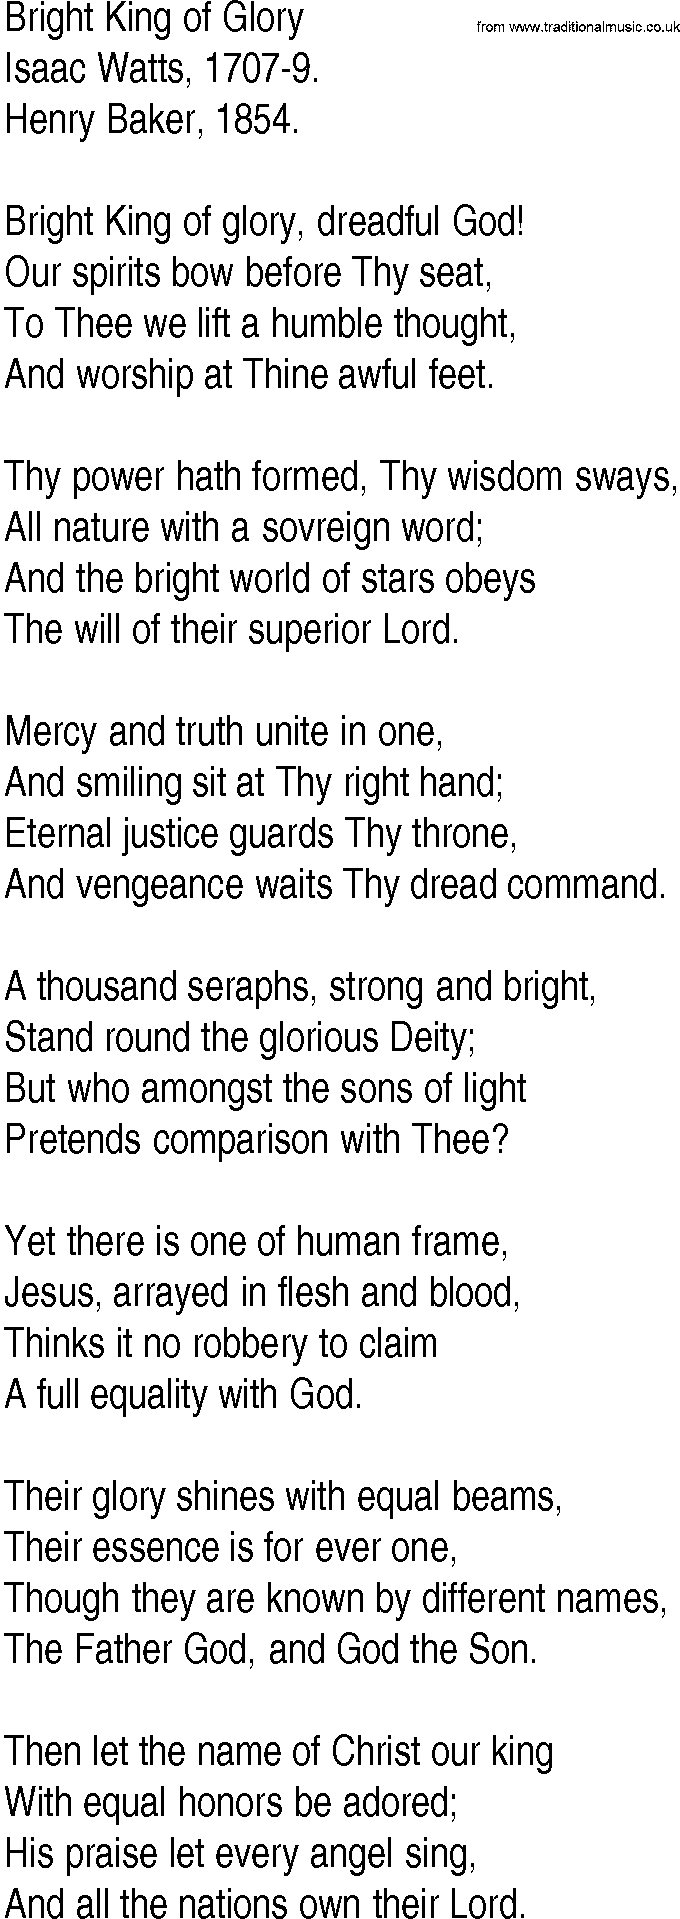 Hymn and Gospel Song: Bright King of Glory by Isaac Watts lyrics